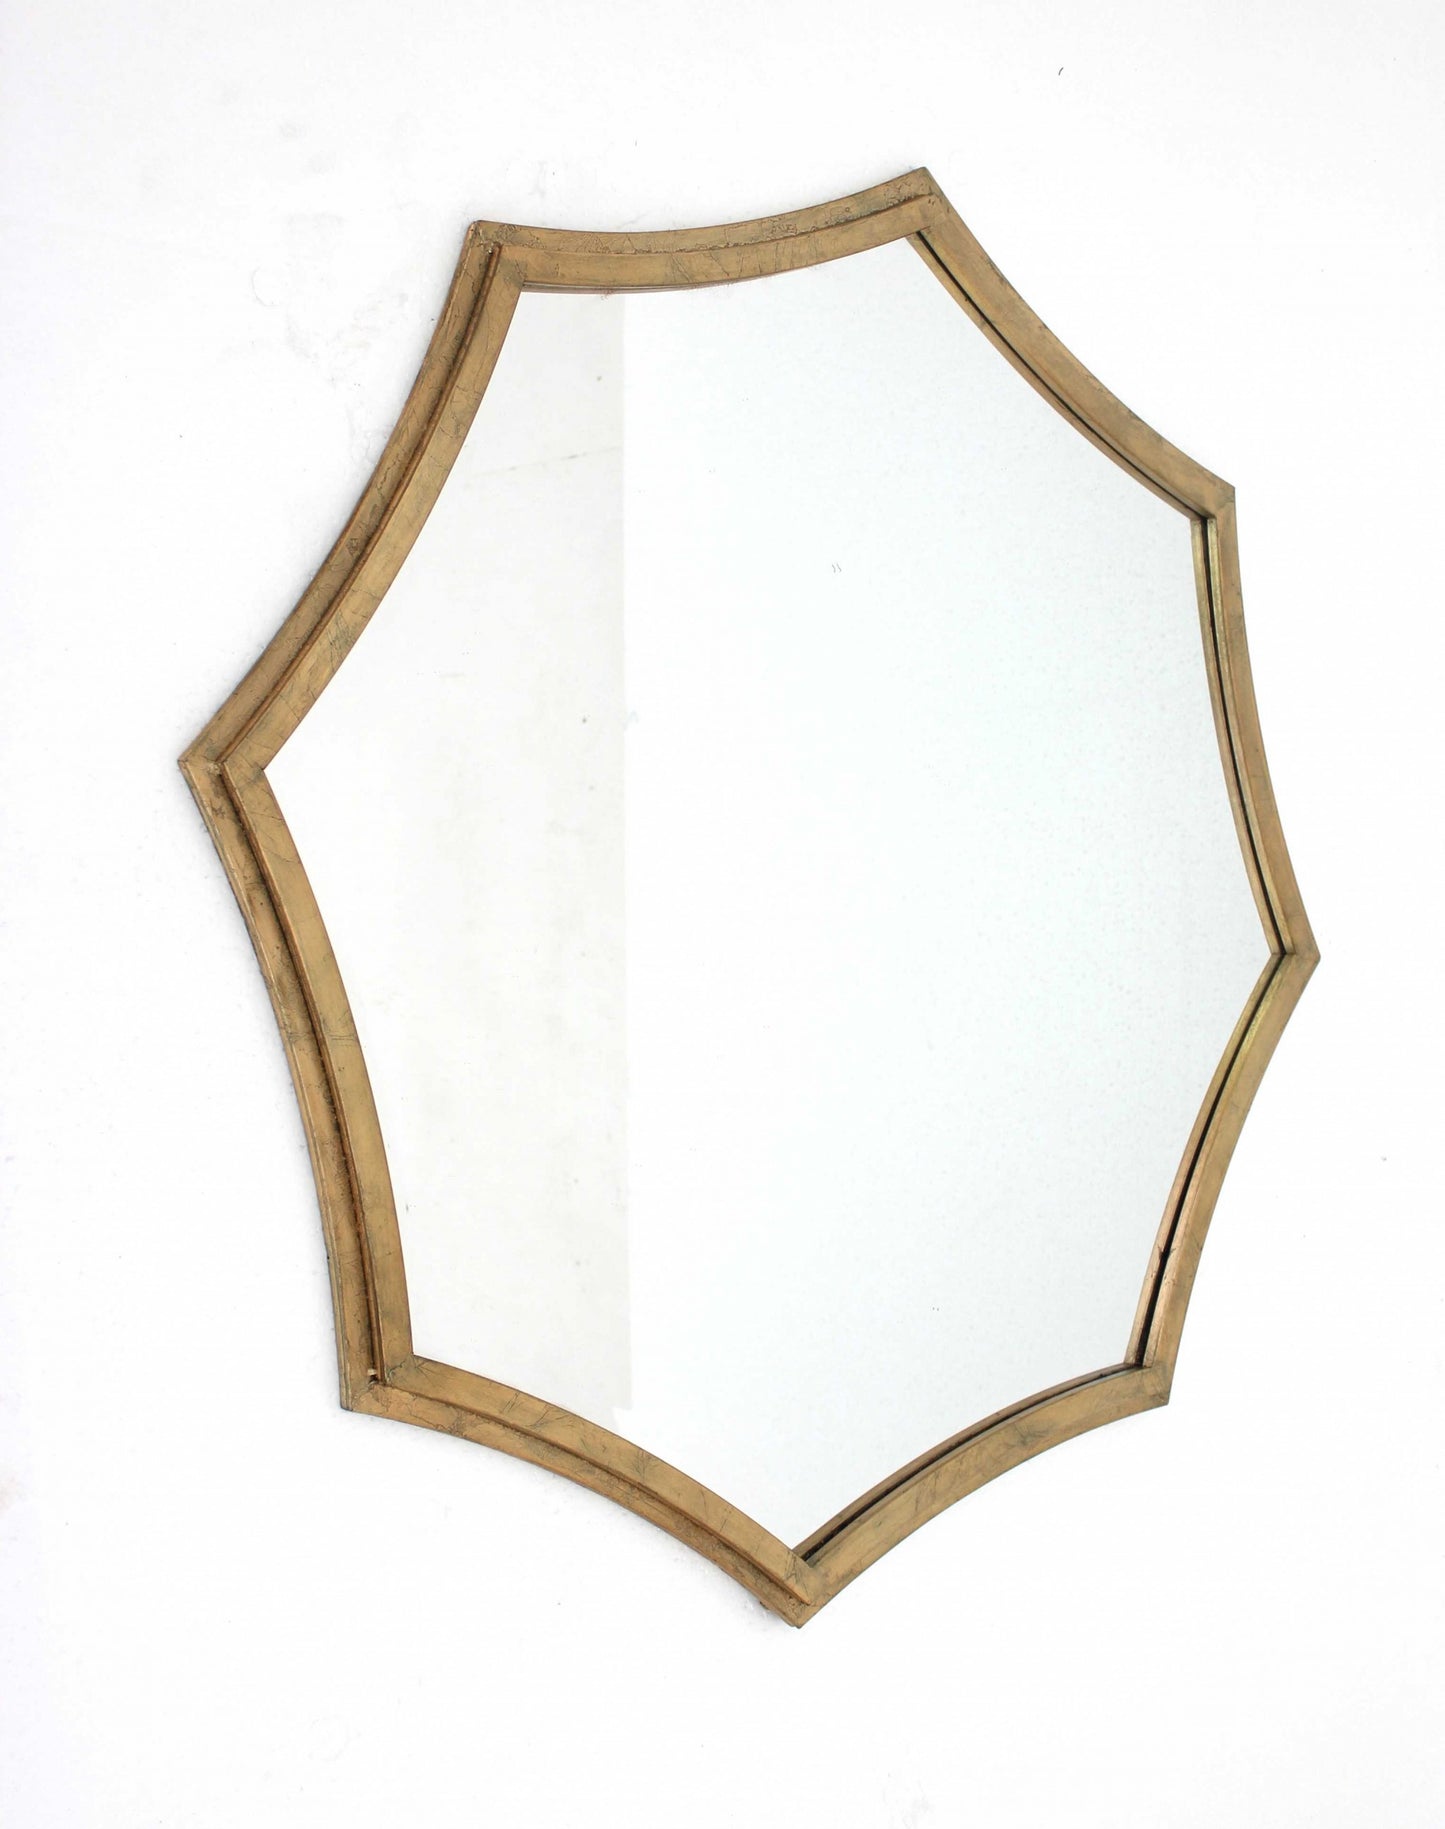 Gold Octagon Accent Metal Mirror